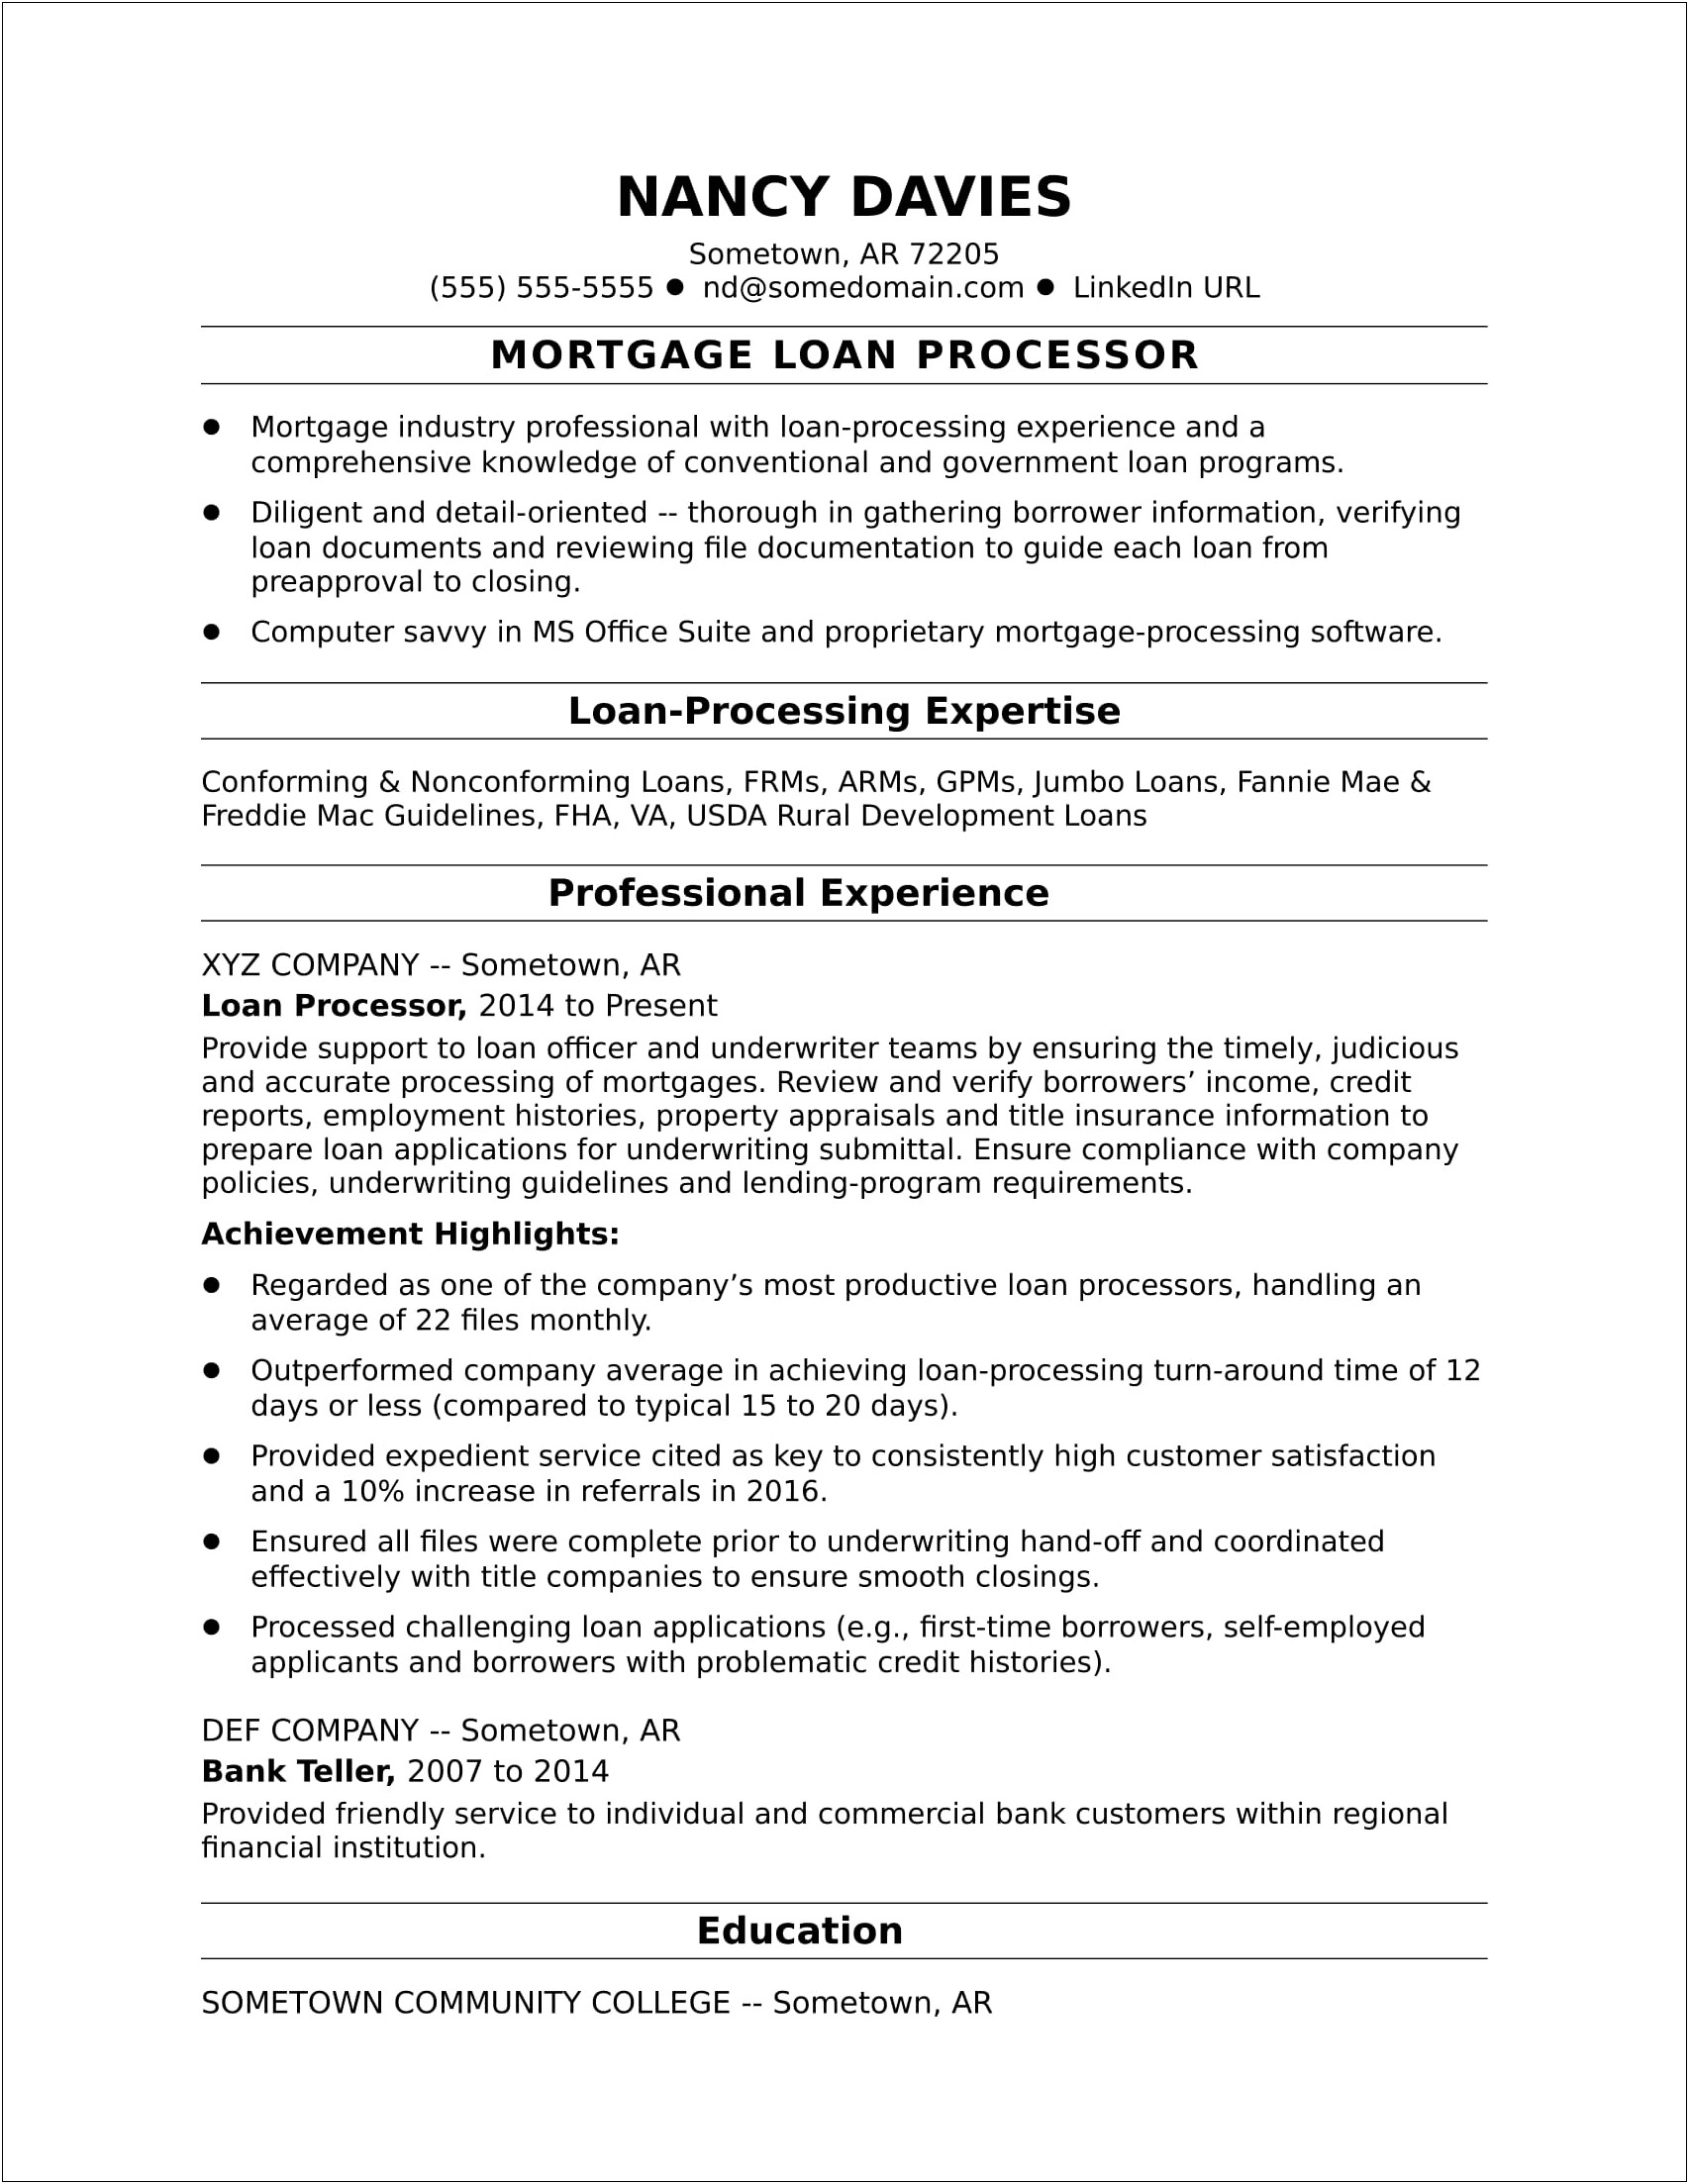 Senior Mortgage Loan Processor Resume Sample